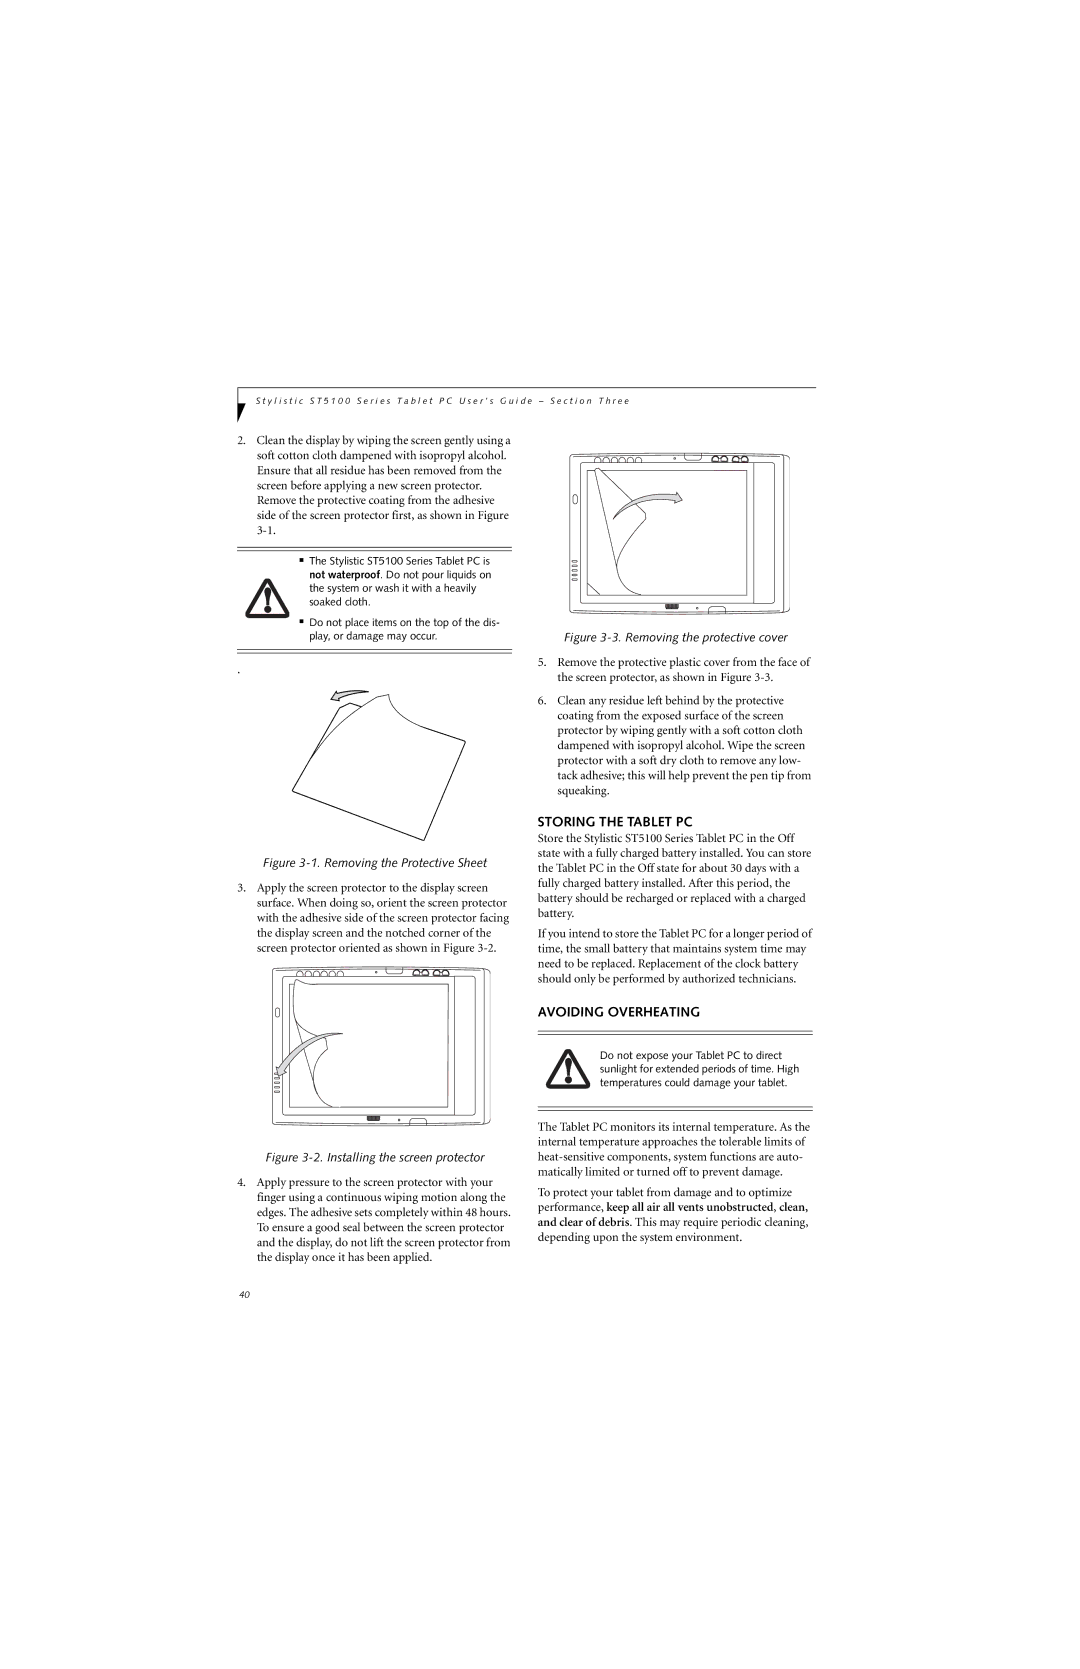 Fujitsu ST5112, ST5111 manual Storing the Tablet PC, Avoiding Overheating 